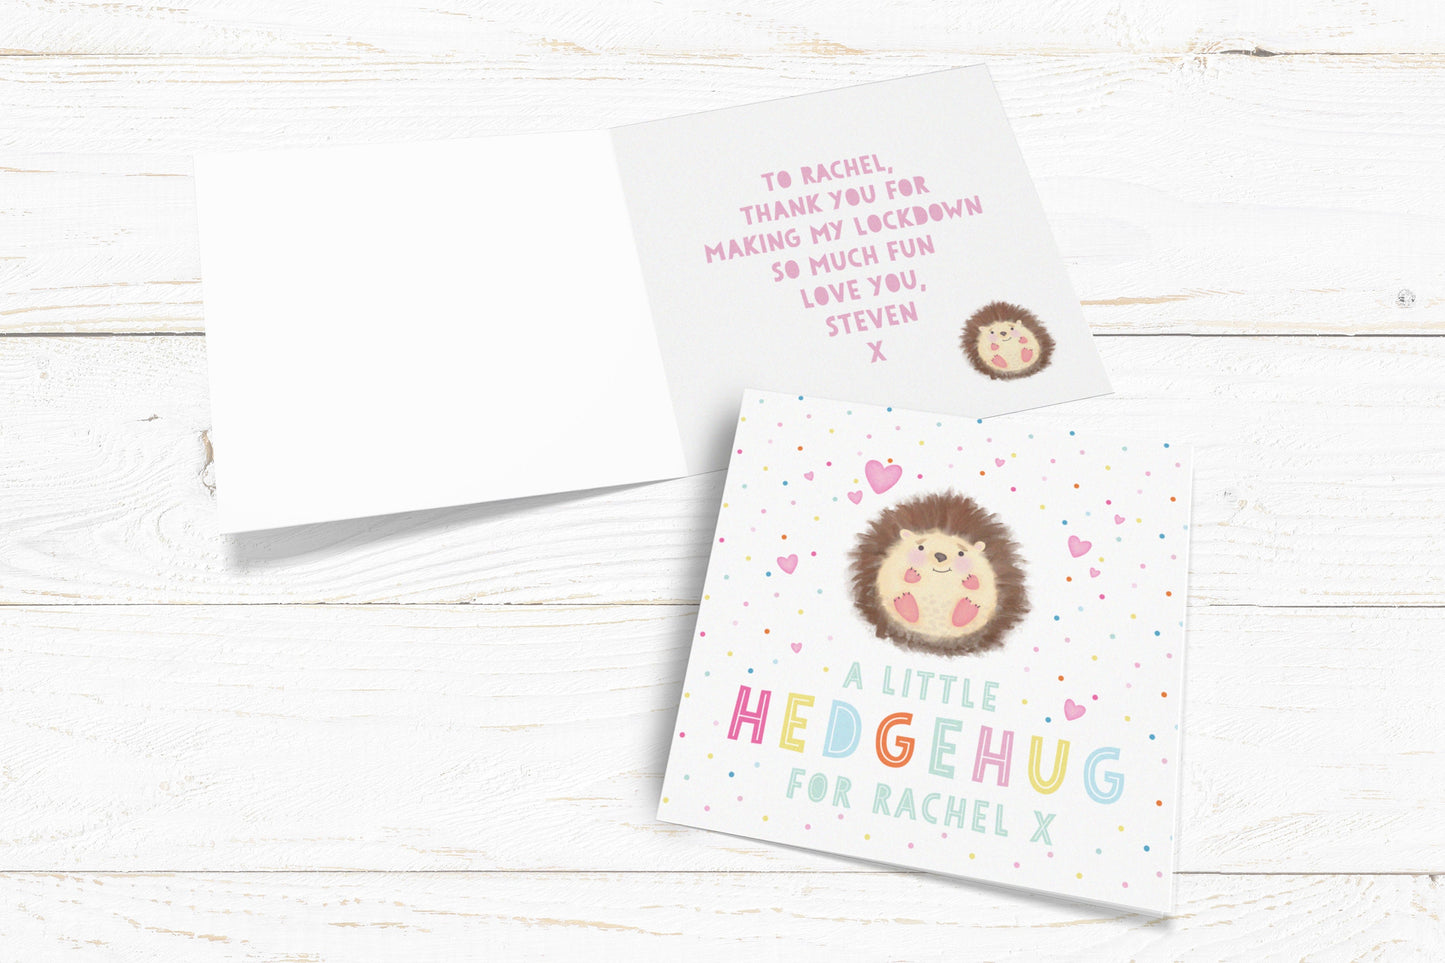 A Little Hedgehug Personliased Card. Valentine's Card. Cute Love Card. Personalised Valentines Card. Cute Hedgehog. Send Direct Option.